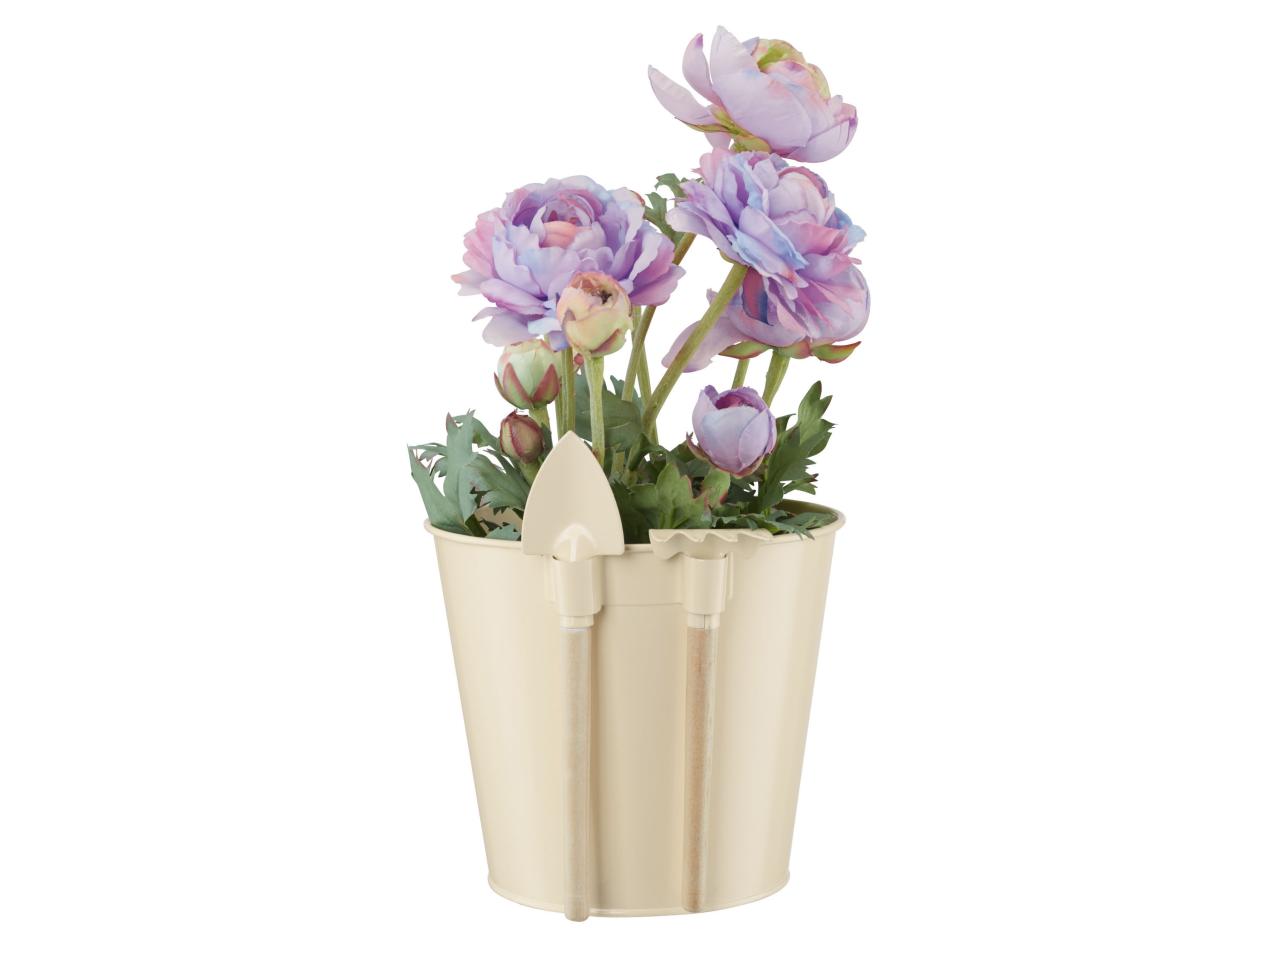 Flower Pot with Mini Garden Tools